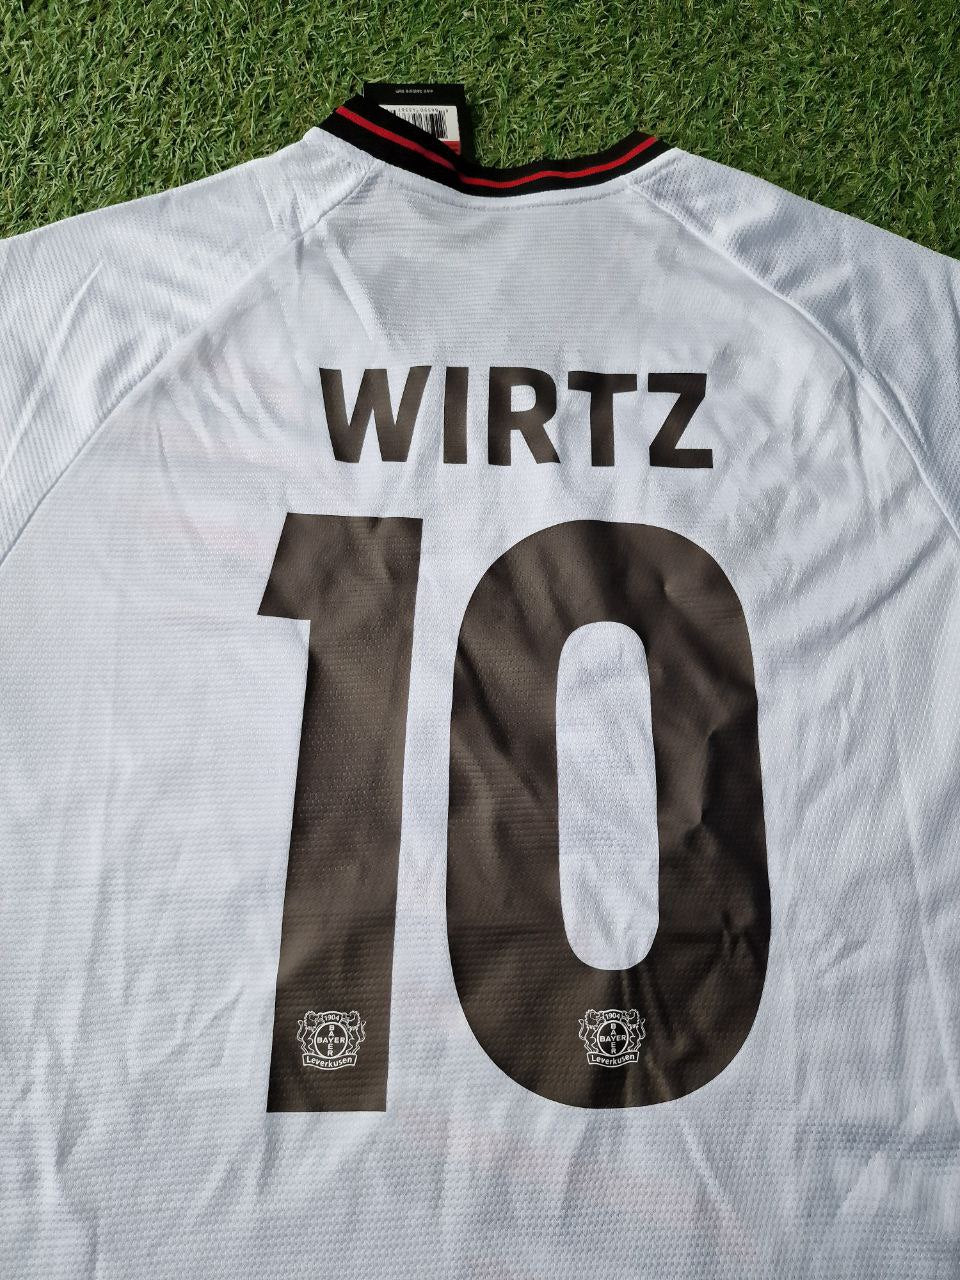 Florian Wirtz Bayer Leverkusen Futbol Forması